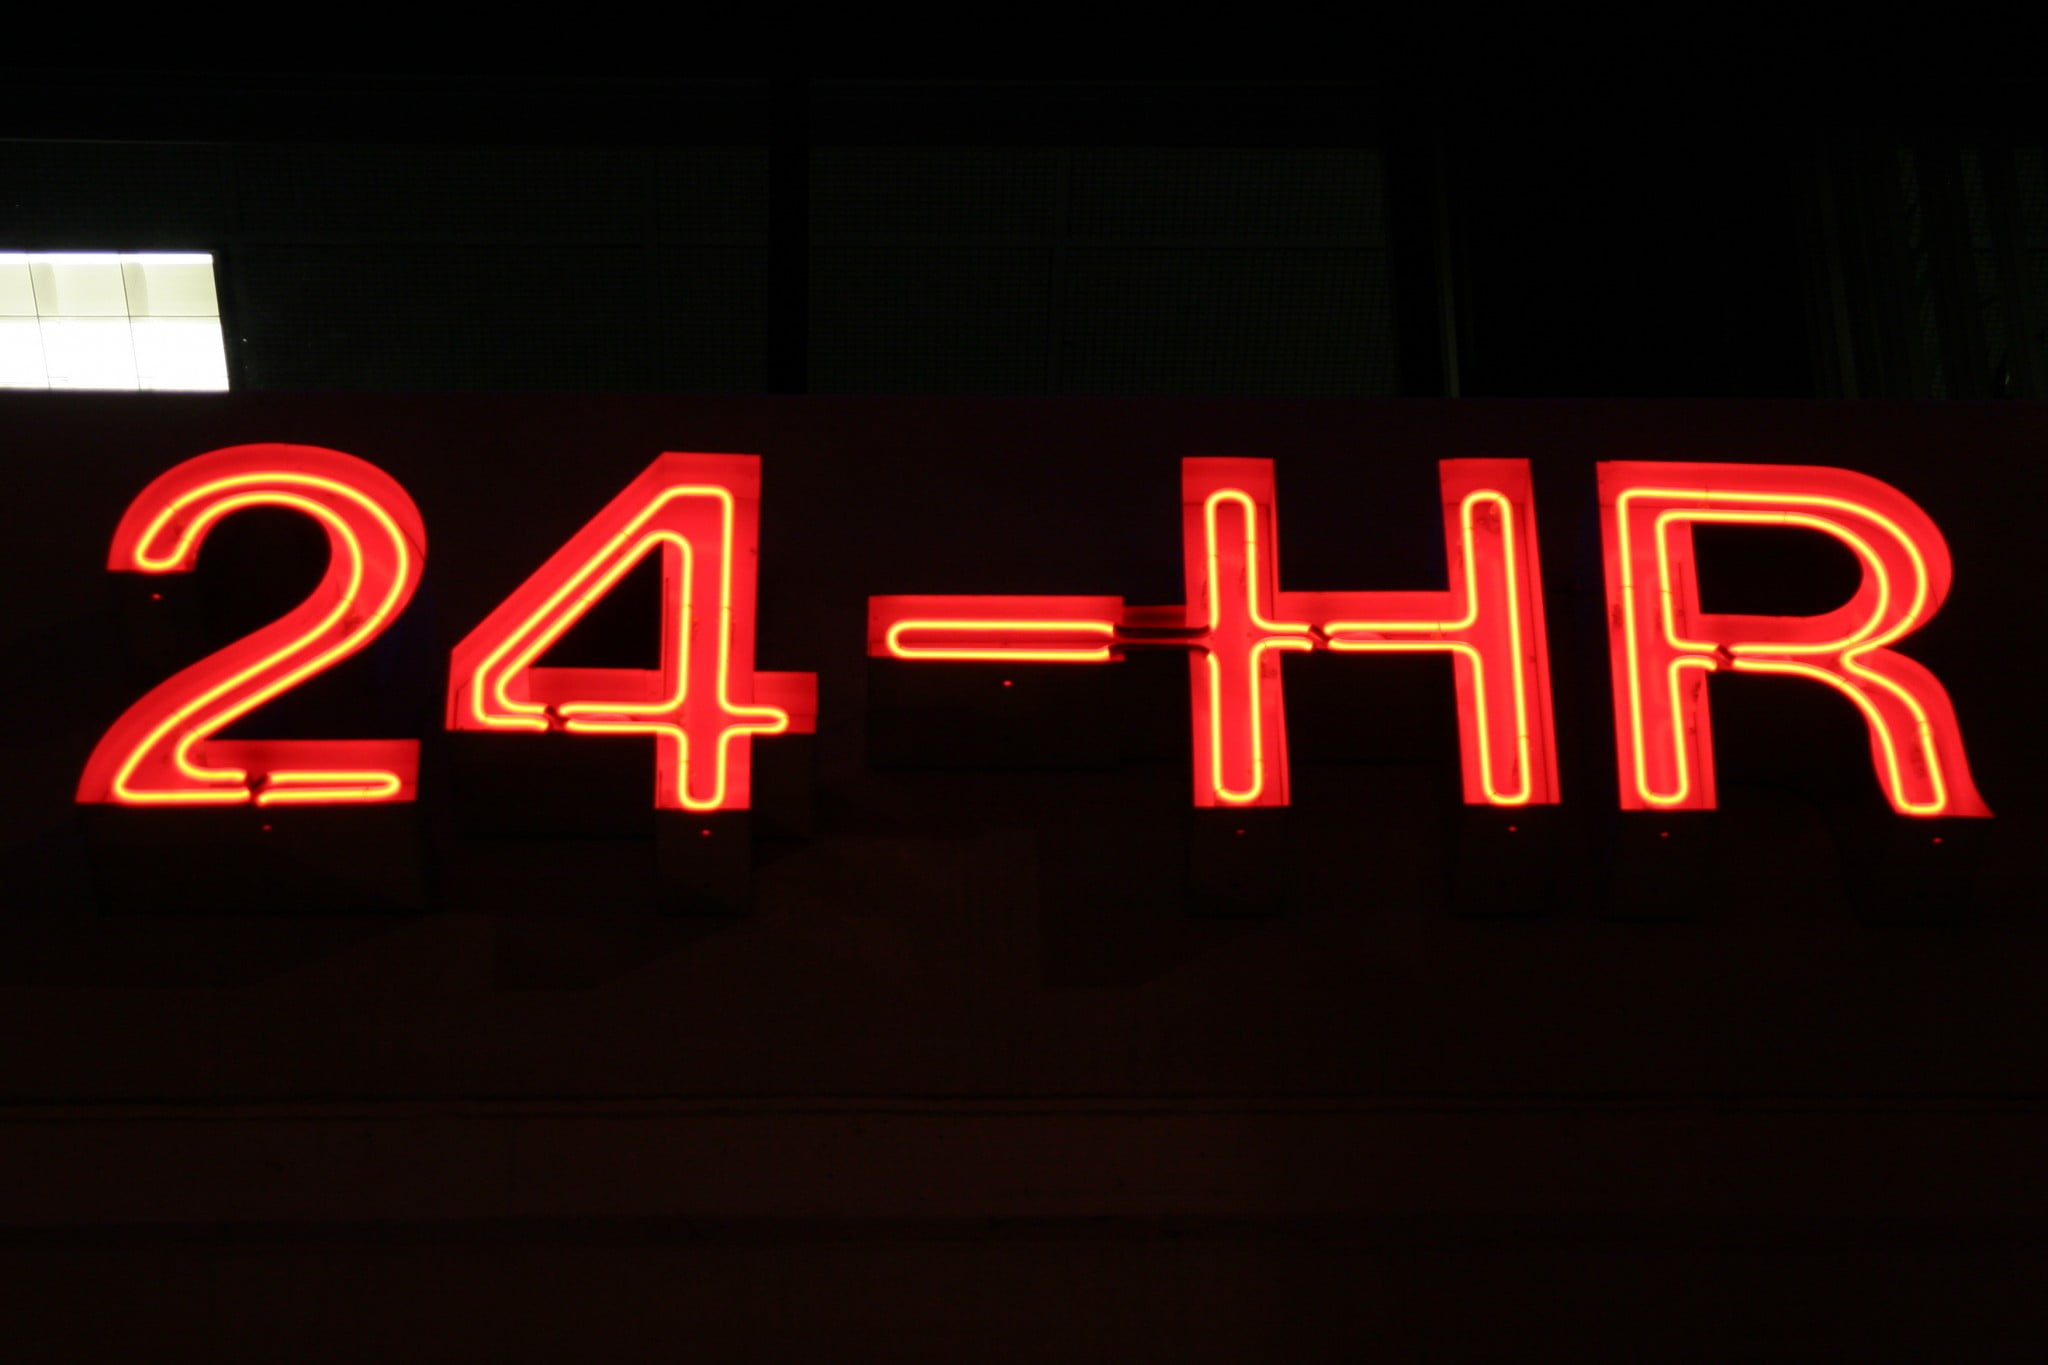 24 hour pharmacy neon sign